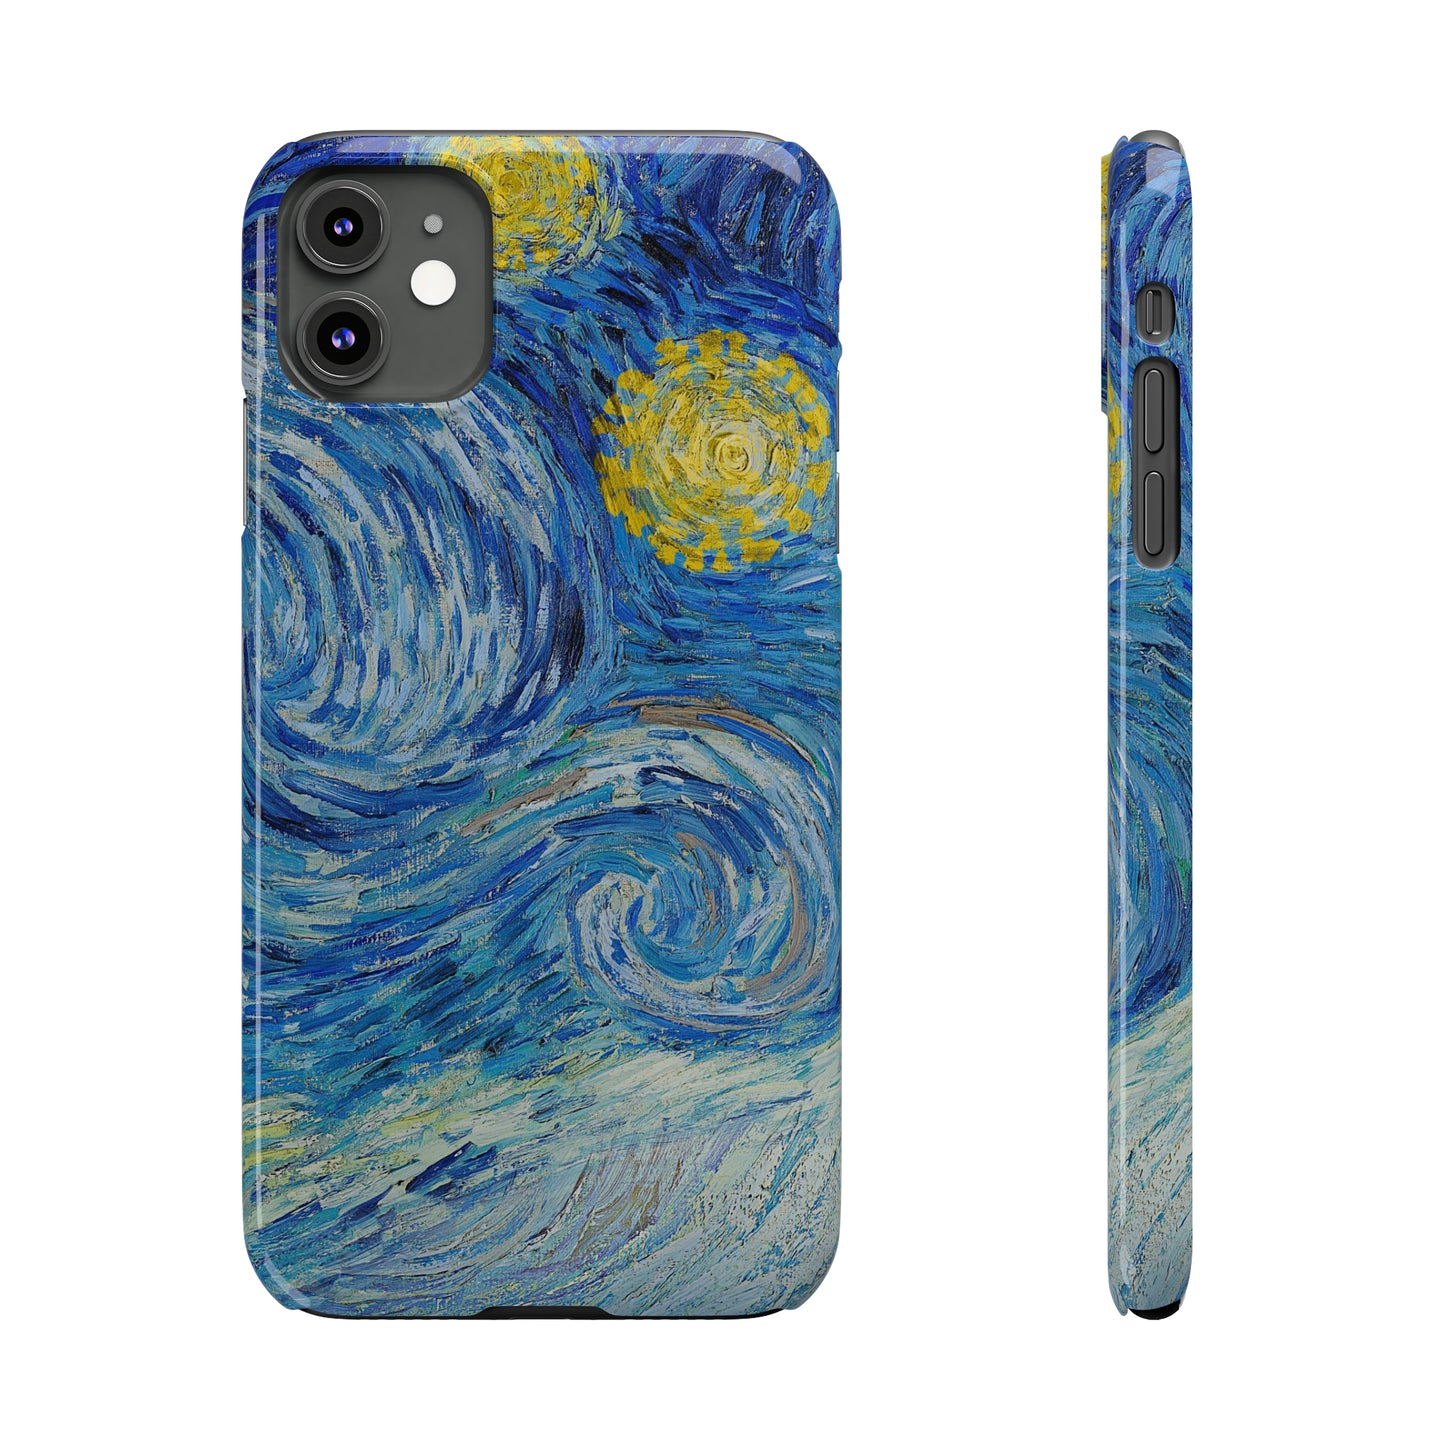 Van Gogh iPhone case